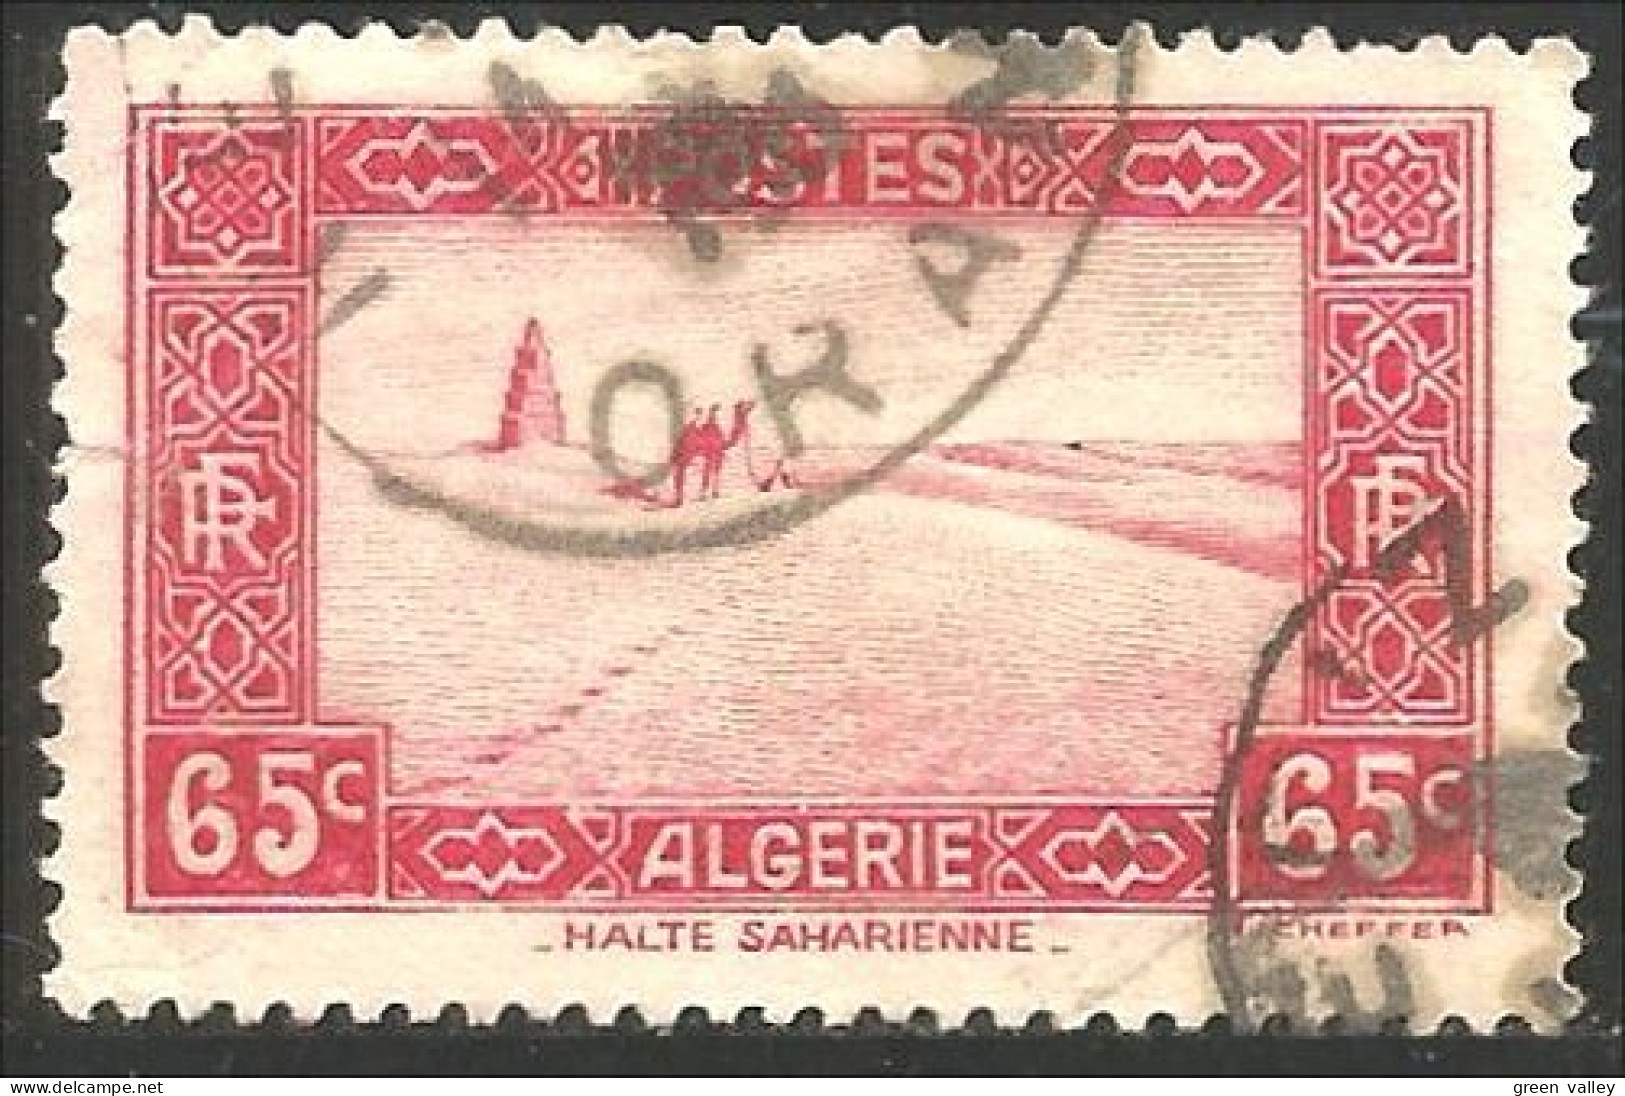 124 Algerie 65c Halte Saharienne Desert Sahara (ALG-181) - Oblitérés